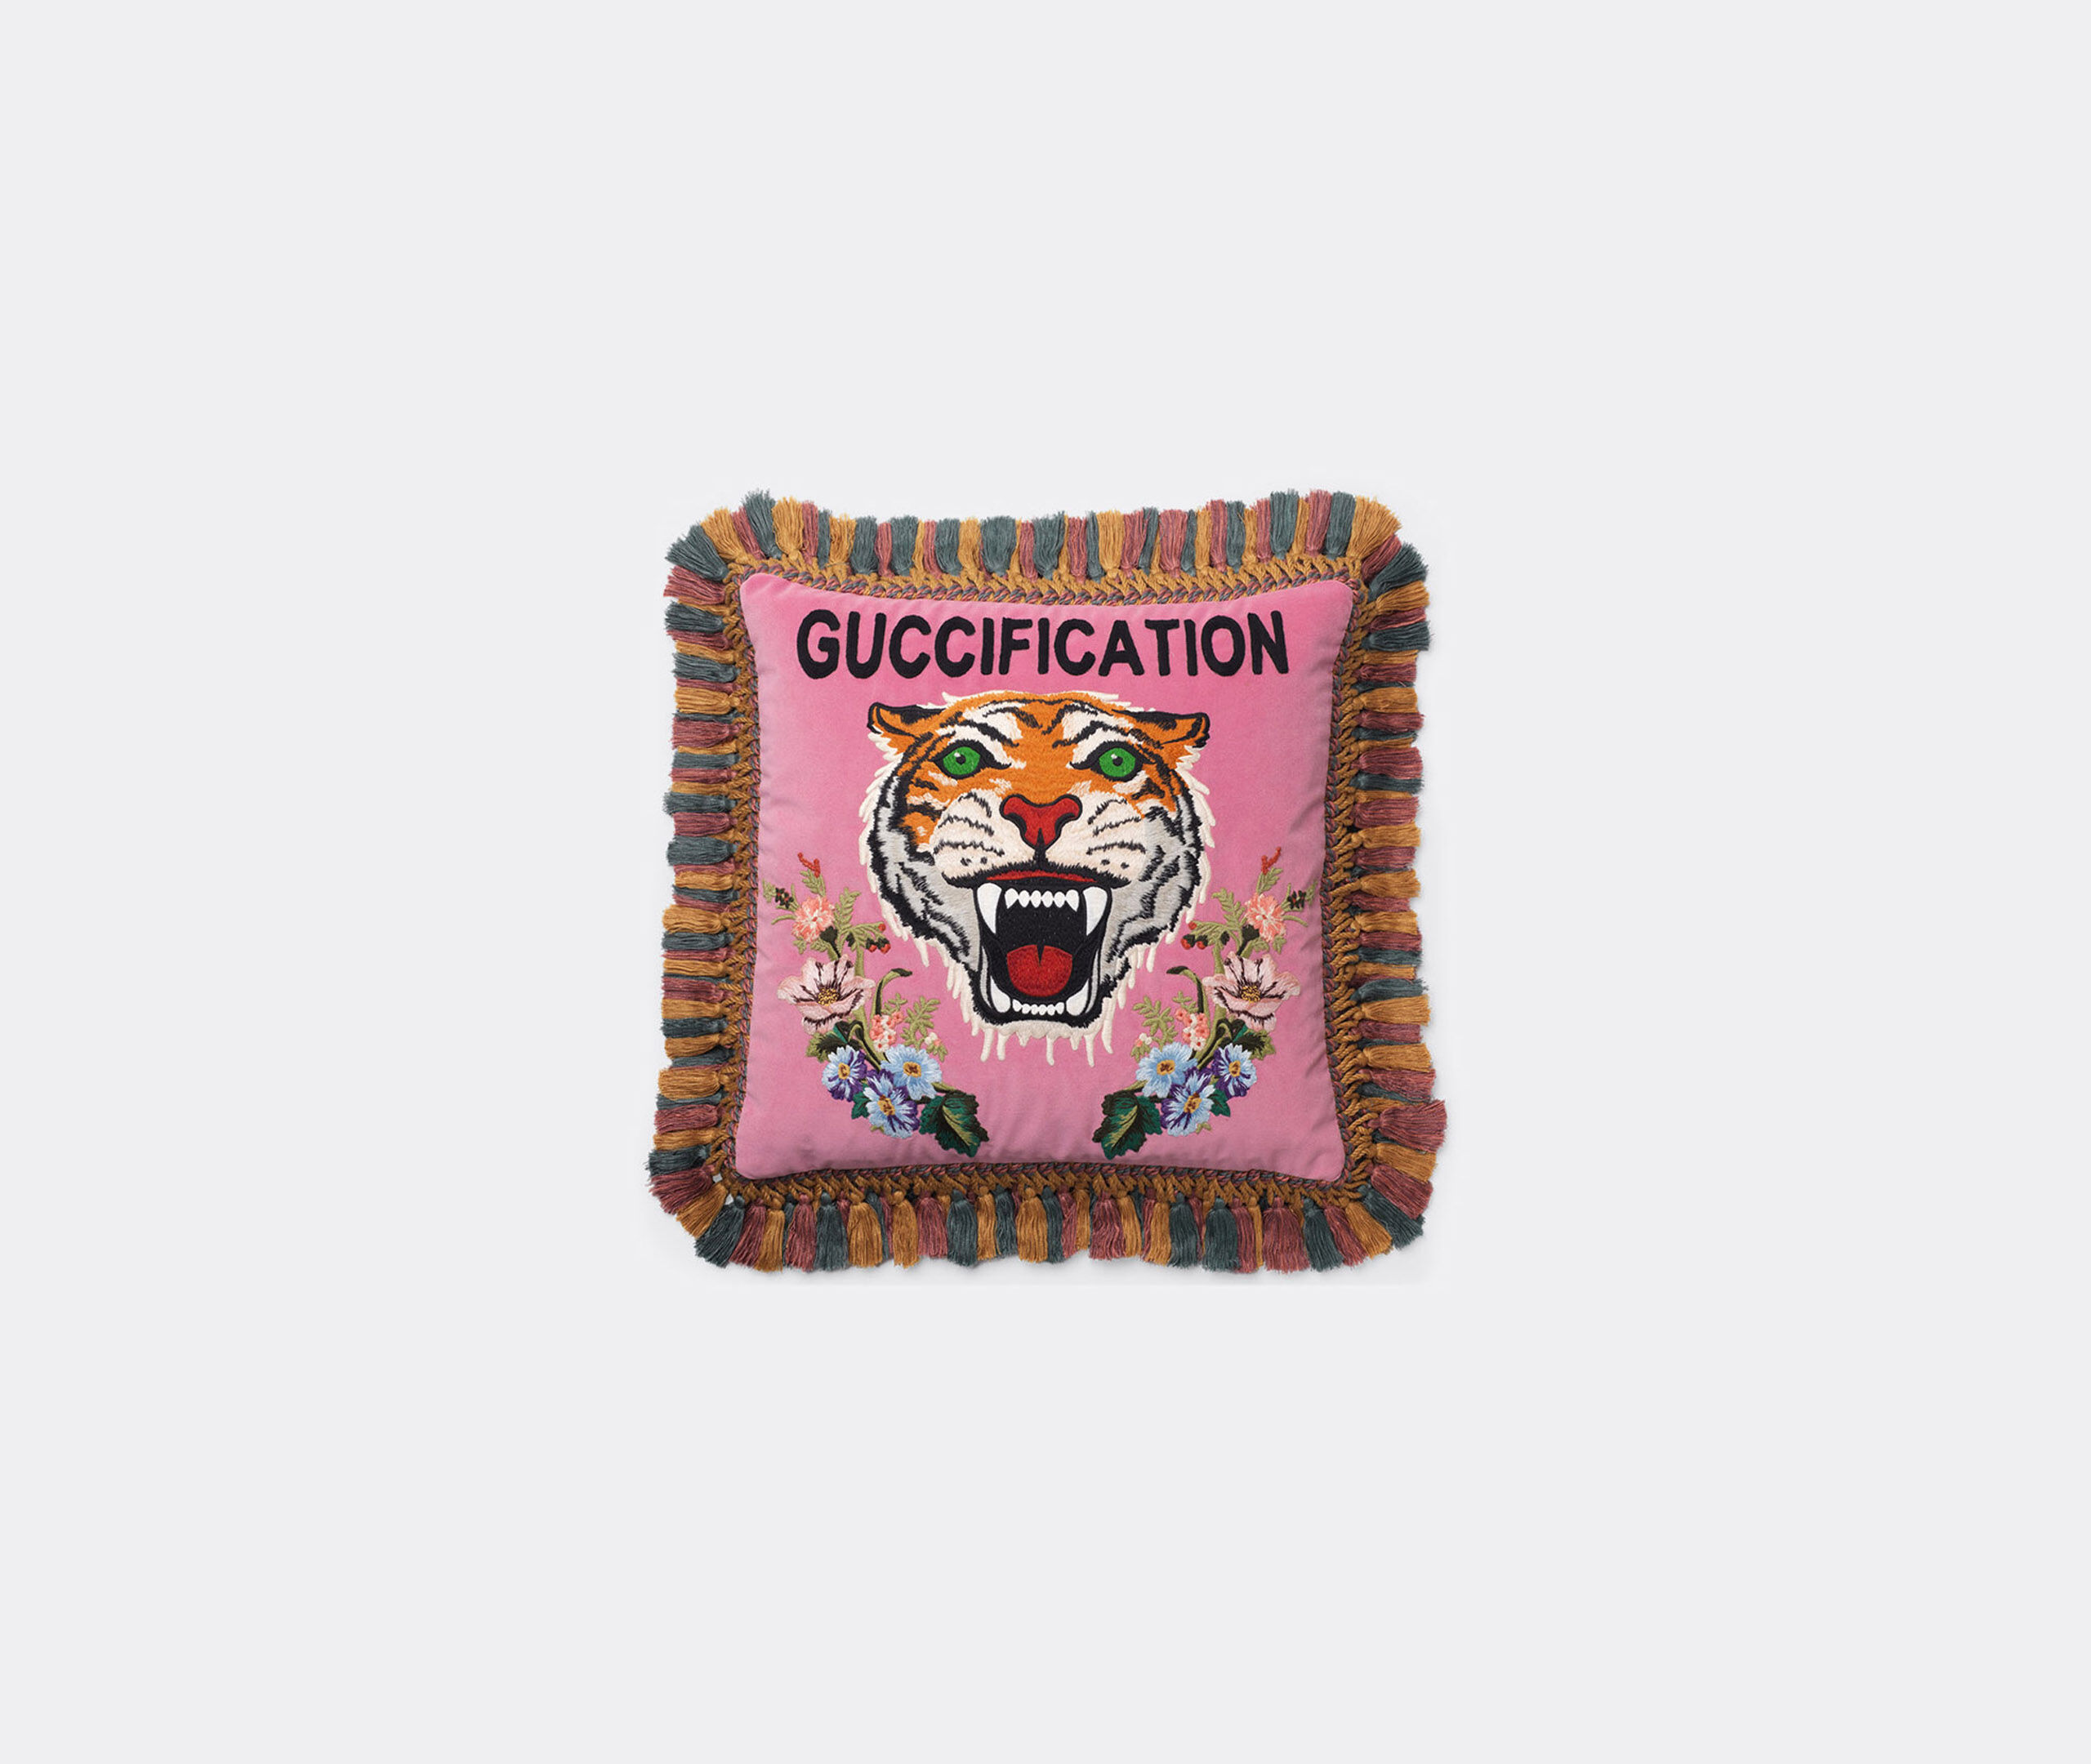 Gucci Guccification - Gucci Tiger Pillow - HD Wallpaper 